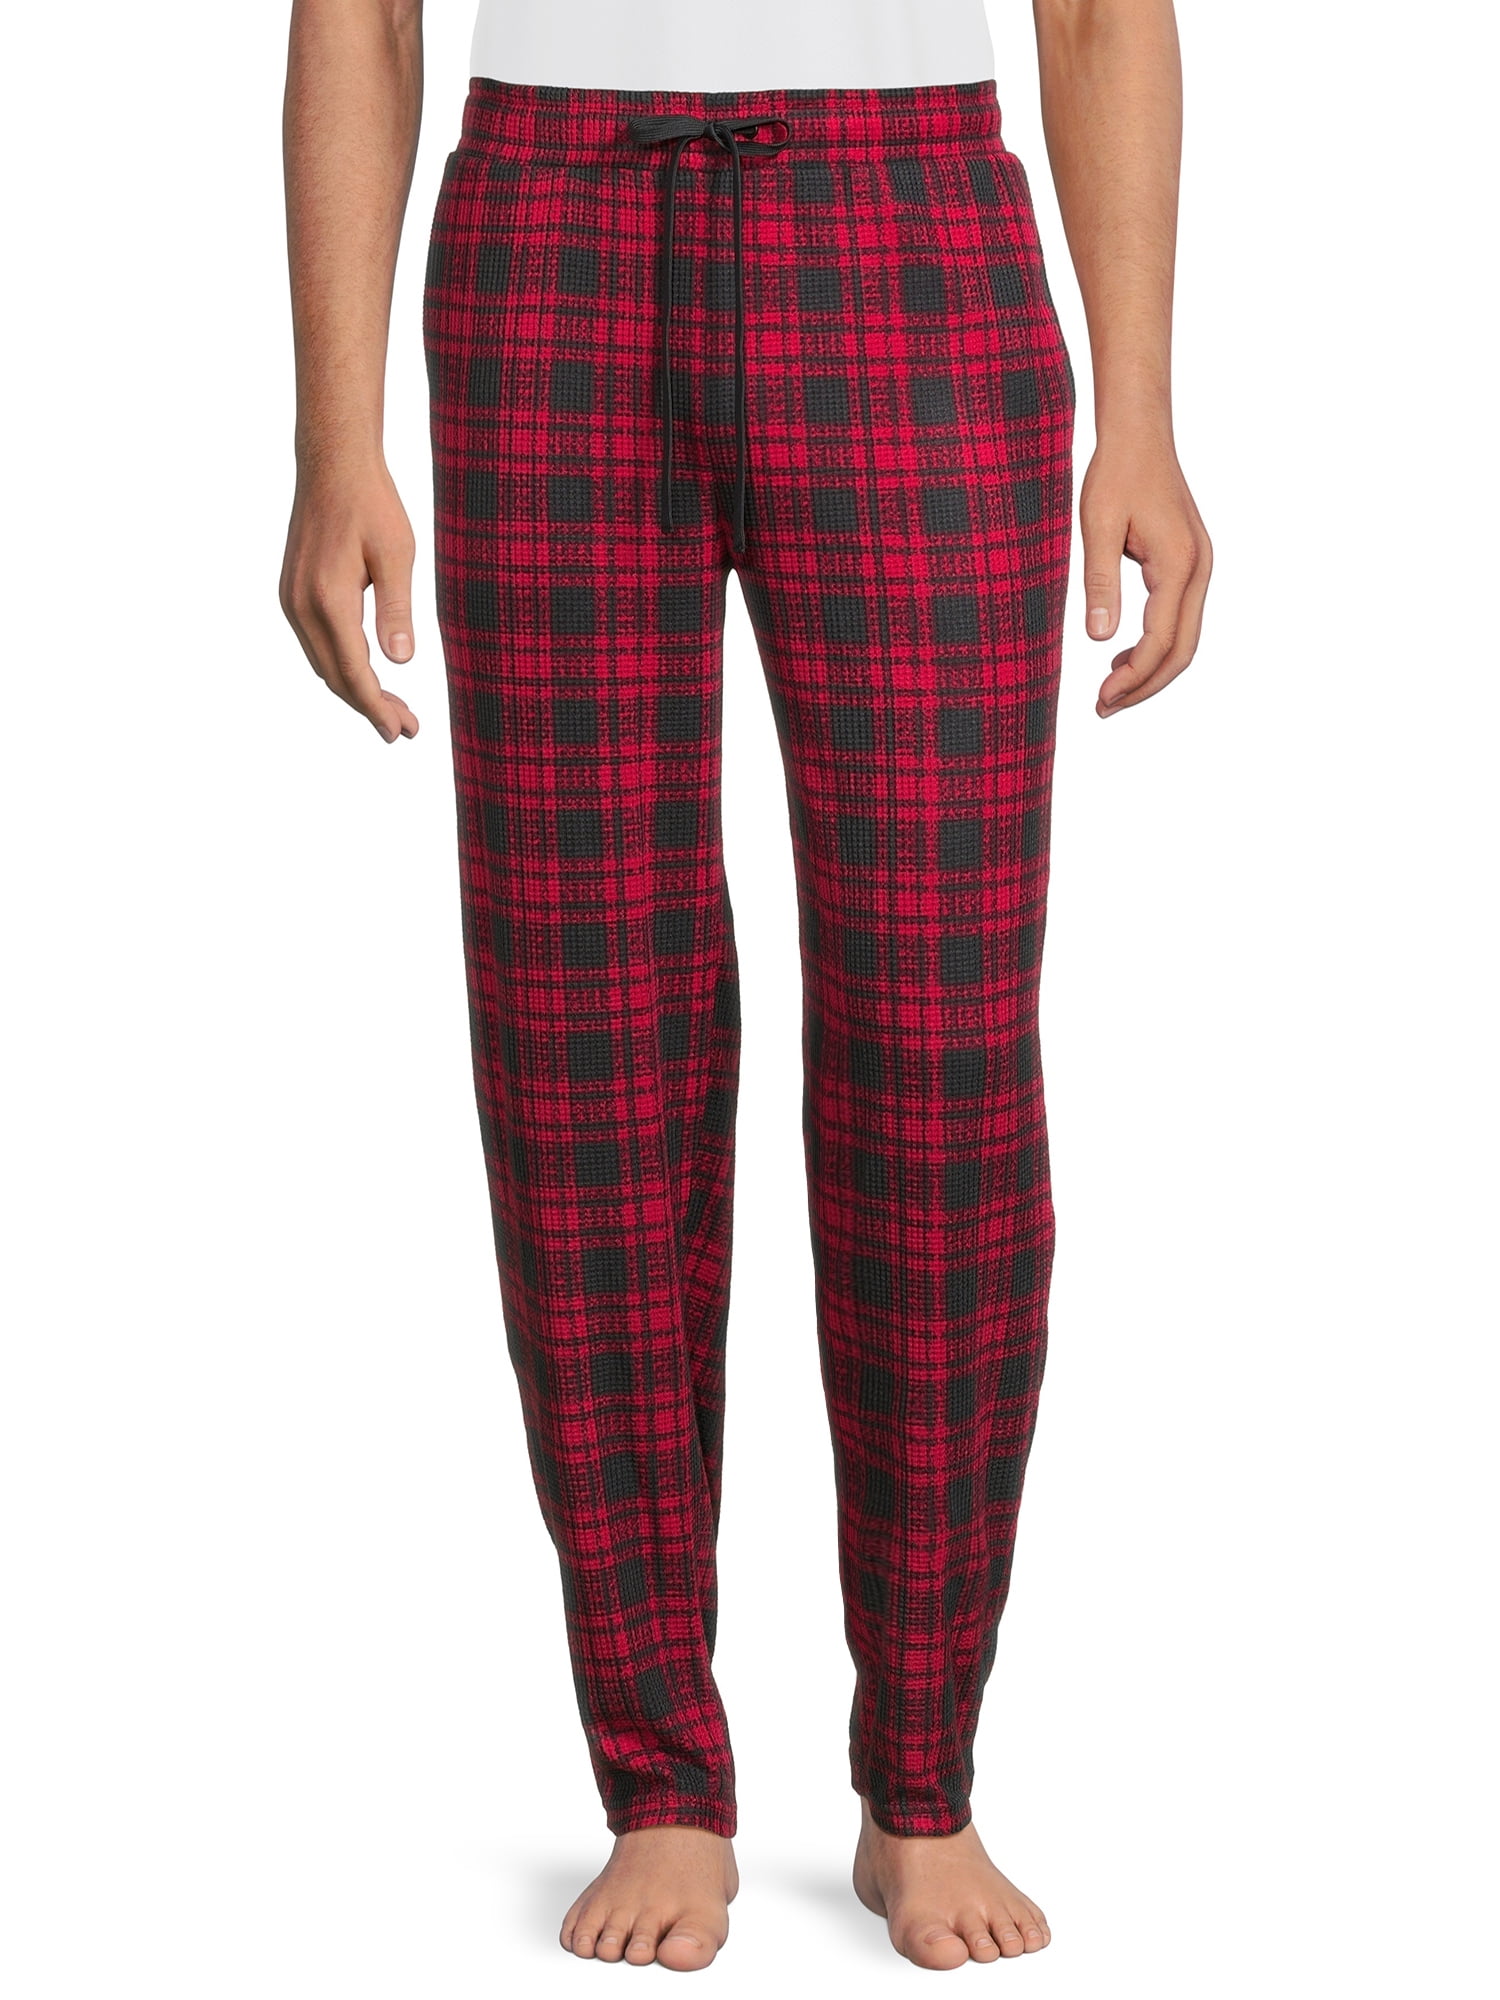 Find Your Perfect George Men's Sleep Pants, Sizes S-2XL - Walmart.com